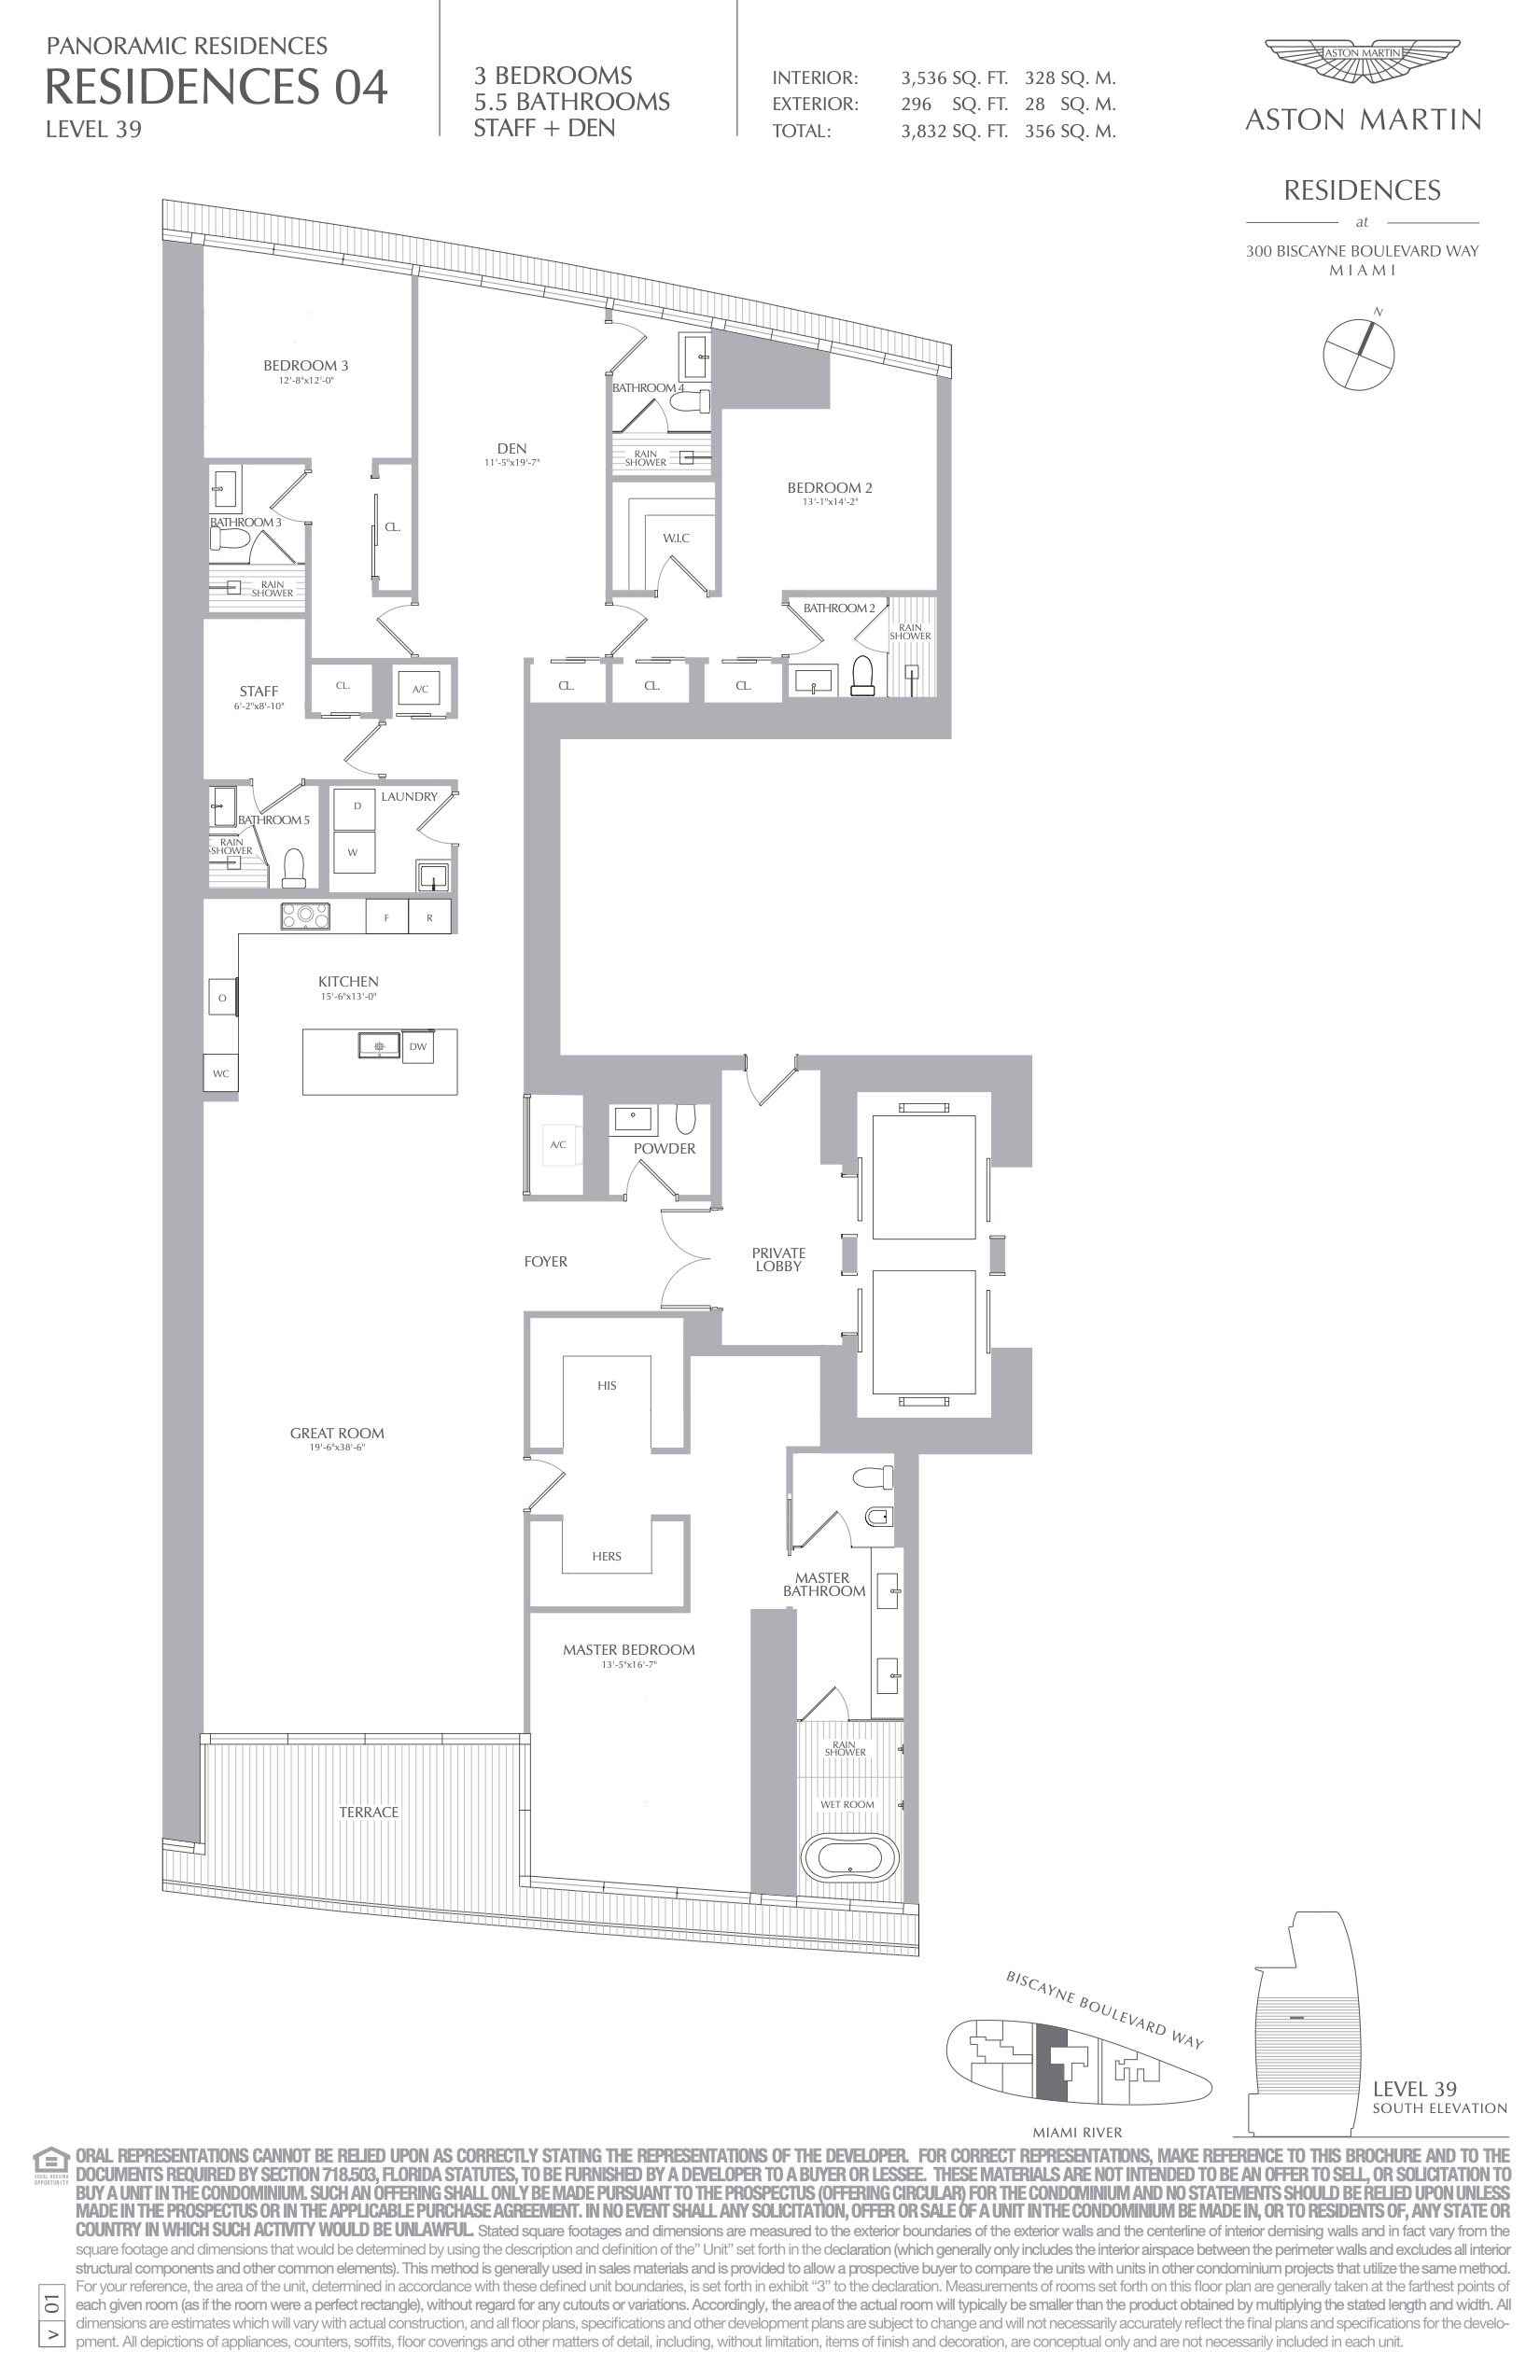 Residence 04 - Level 39